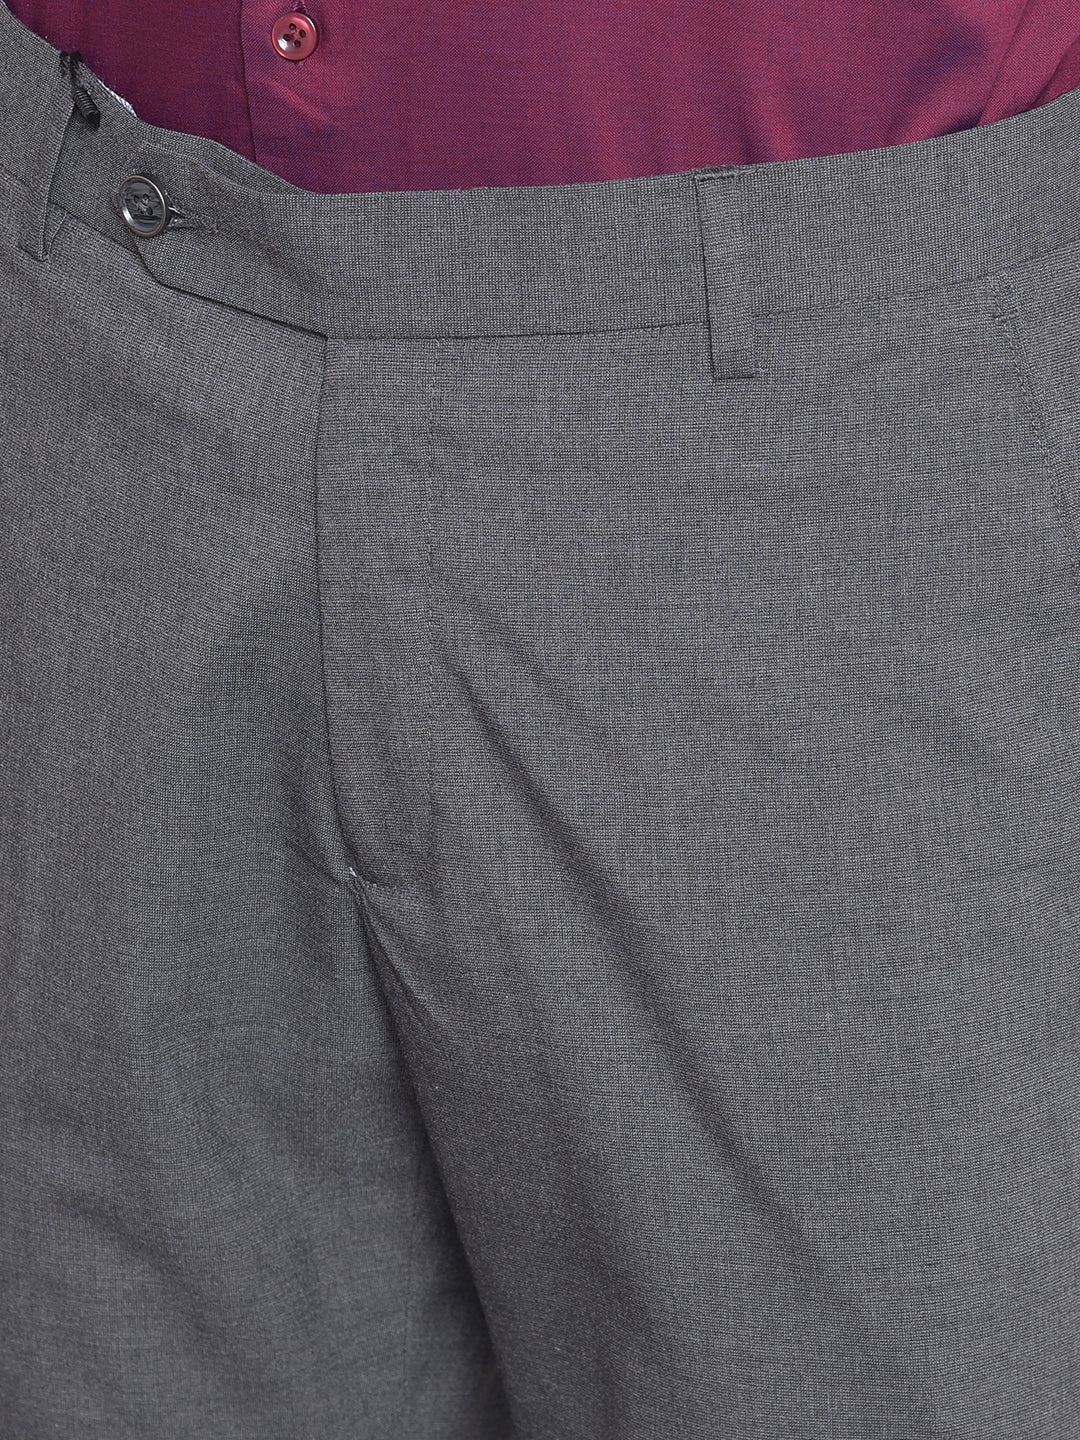 Dark Grey Bird's Eye Brescia Suit Trousers in Pure S130's Wool | SUITSUPPLY  Japan